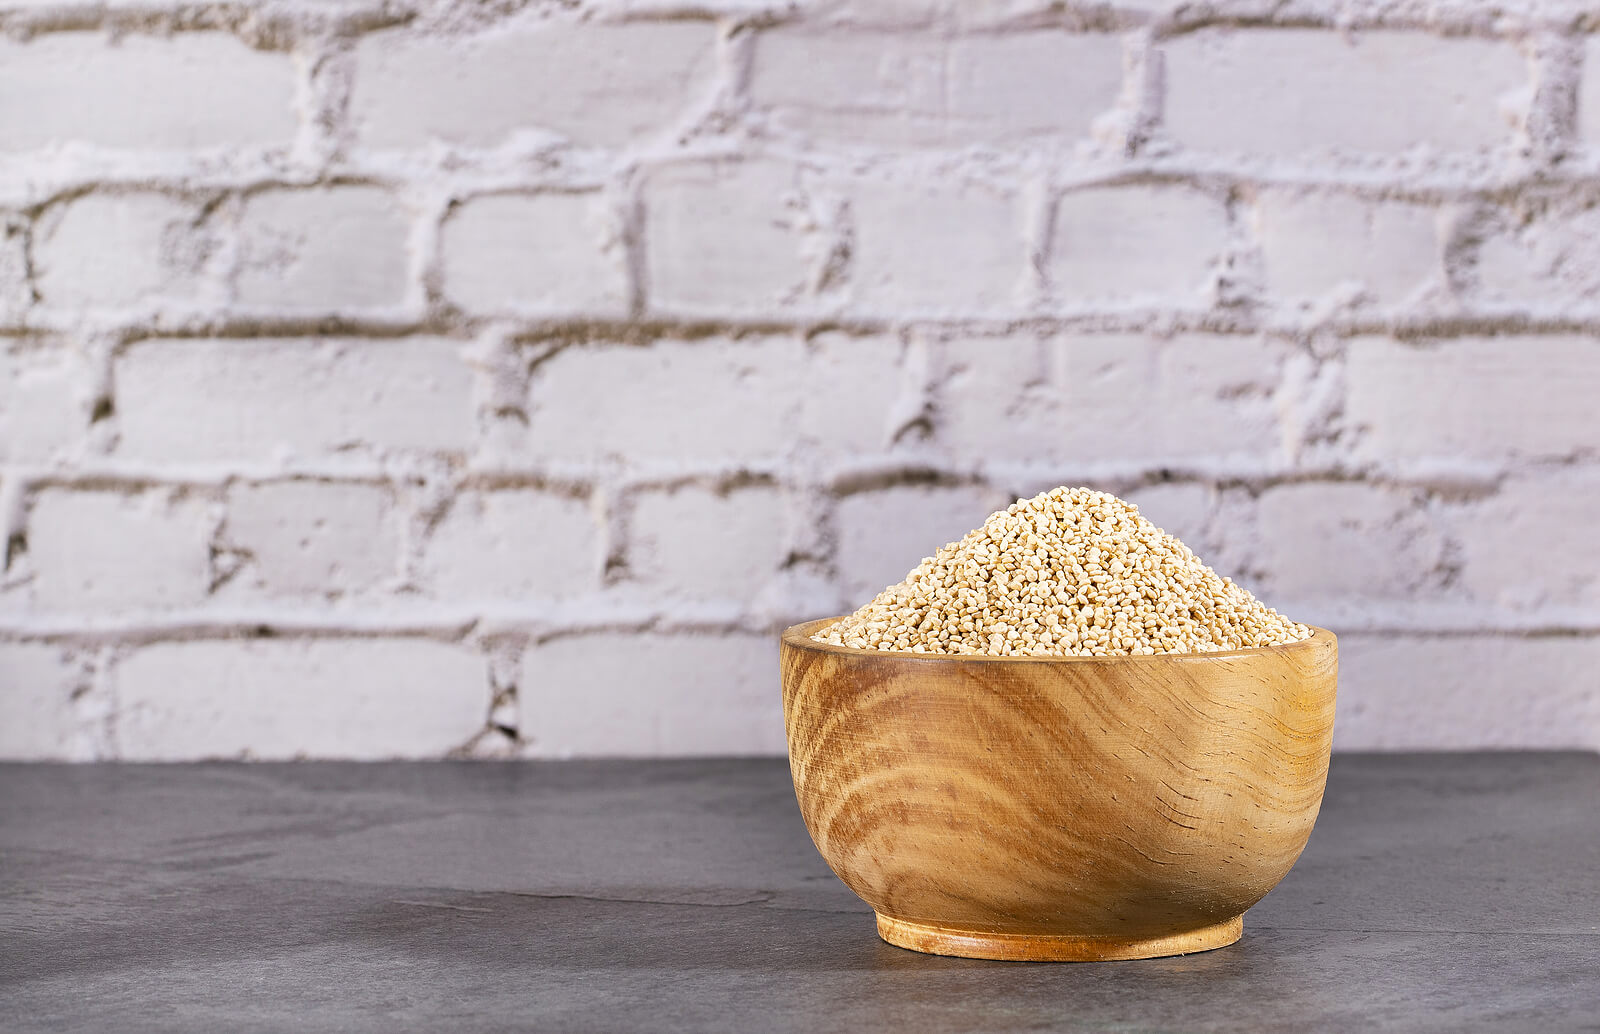 Le bouddha bowl a du quinoa.